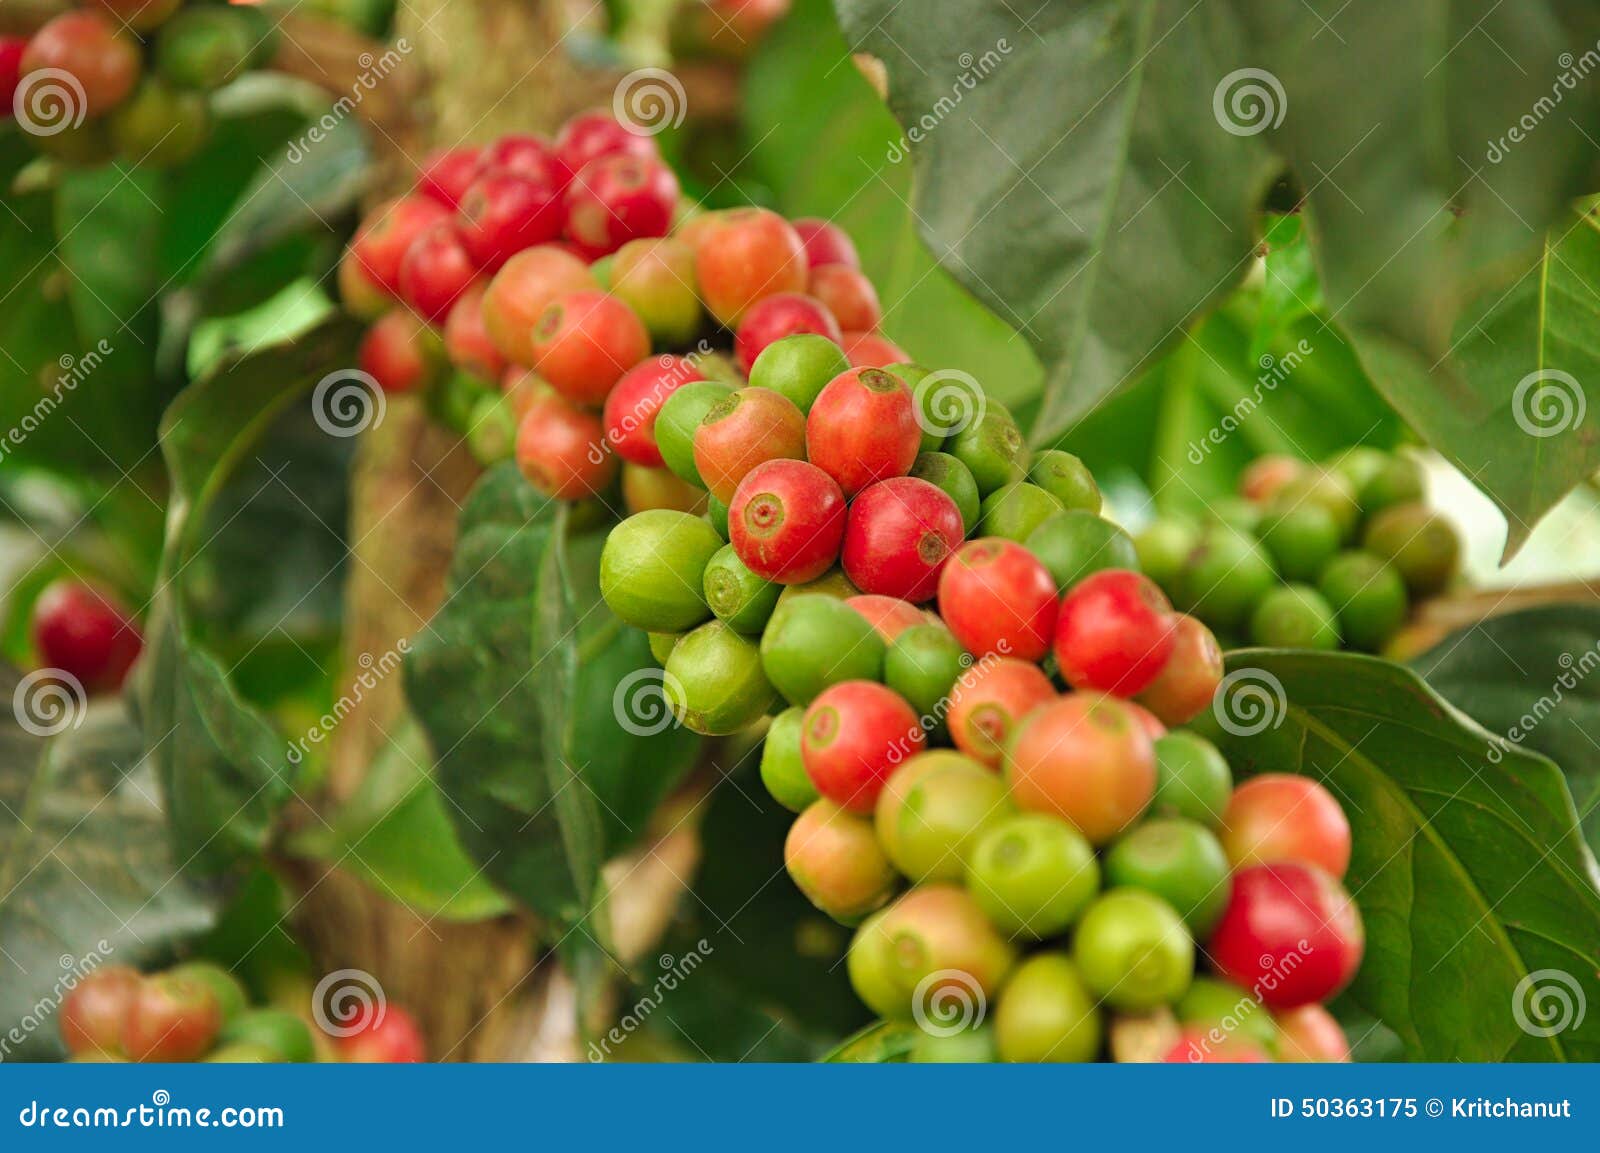 arabica coffee beans on coffee tree